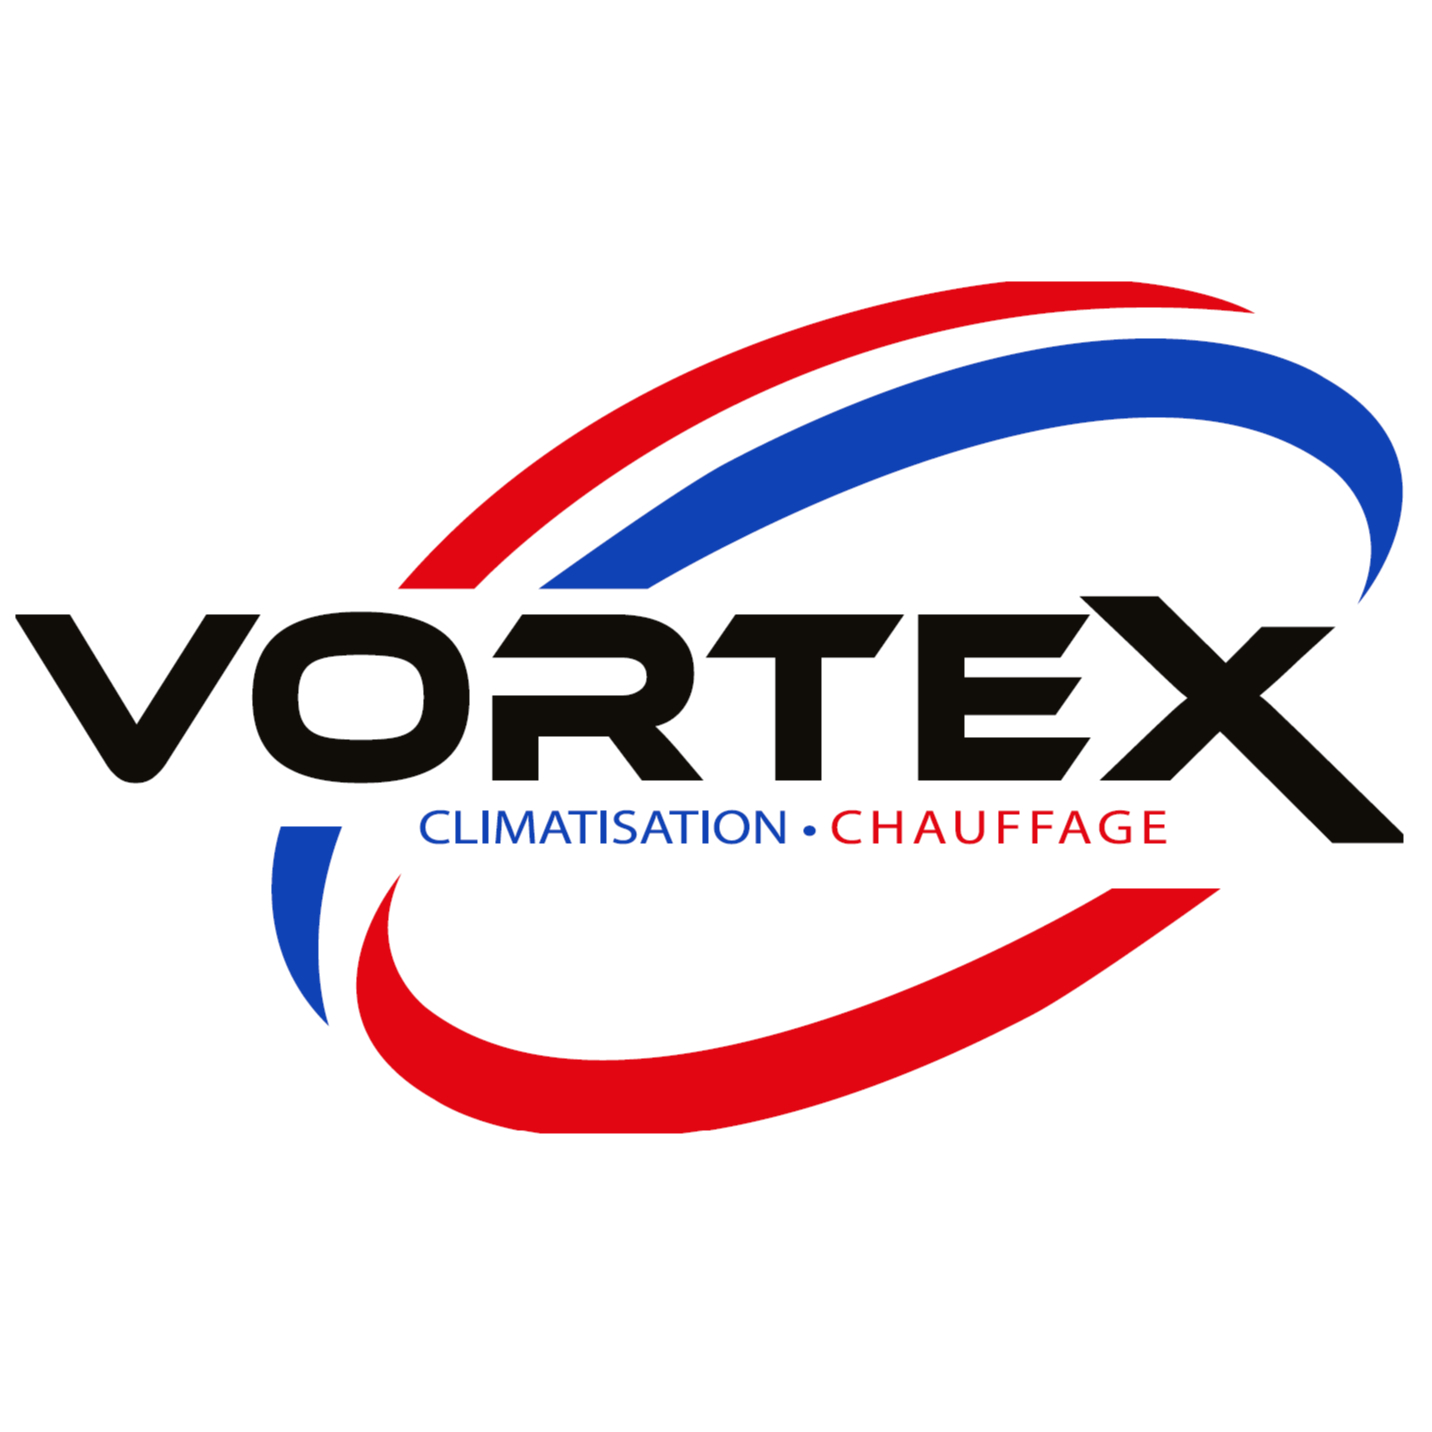 Vortex Climatisation - Installation Chauffage, Thermopompe, Air climatisé, Climatiseur - Entrepreneurs en chauffage